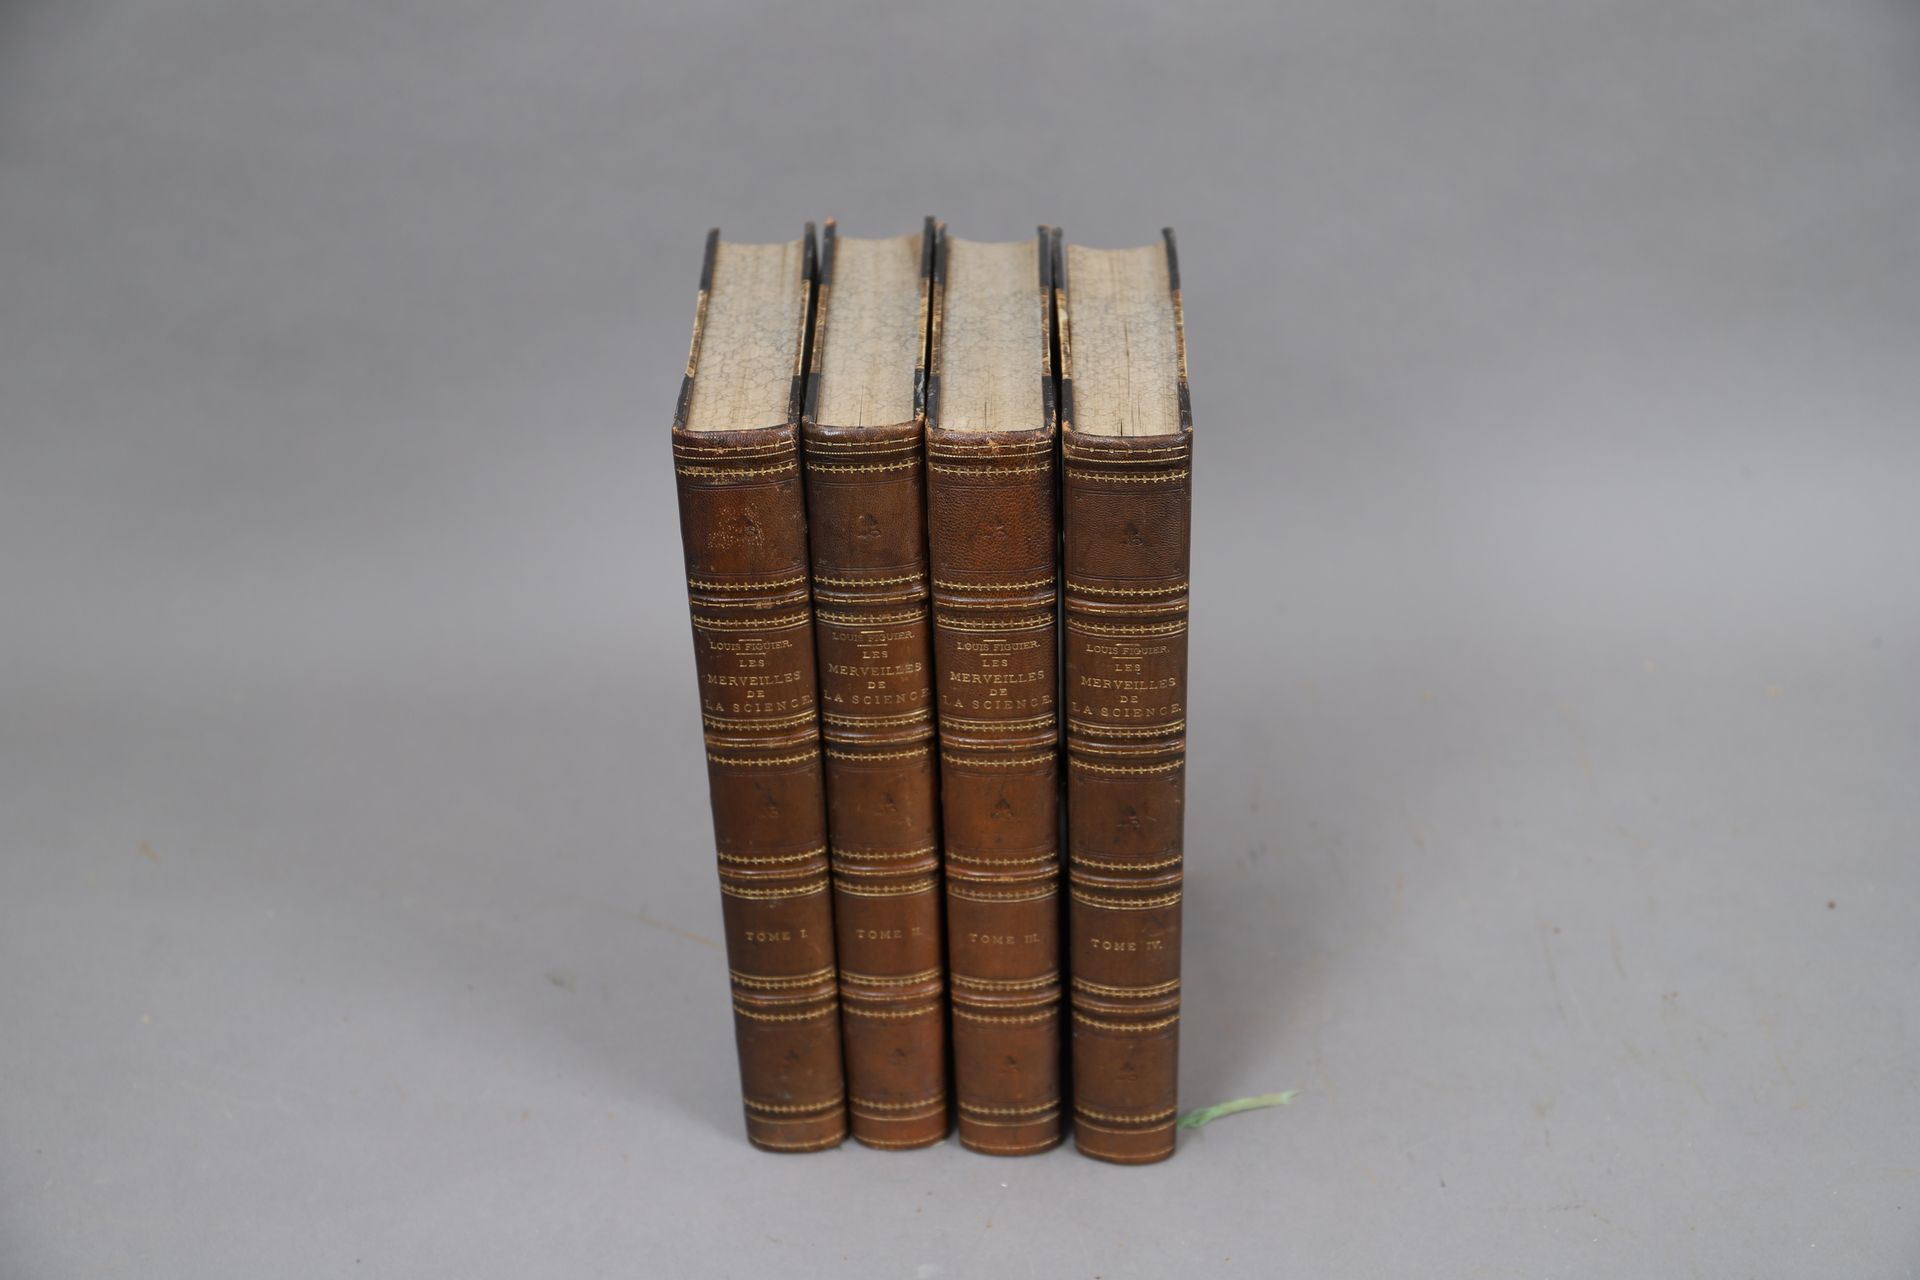 Null FIGUIER - THE WONDERS OF SCIENCE.

4 bound volumes. (1870).